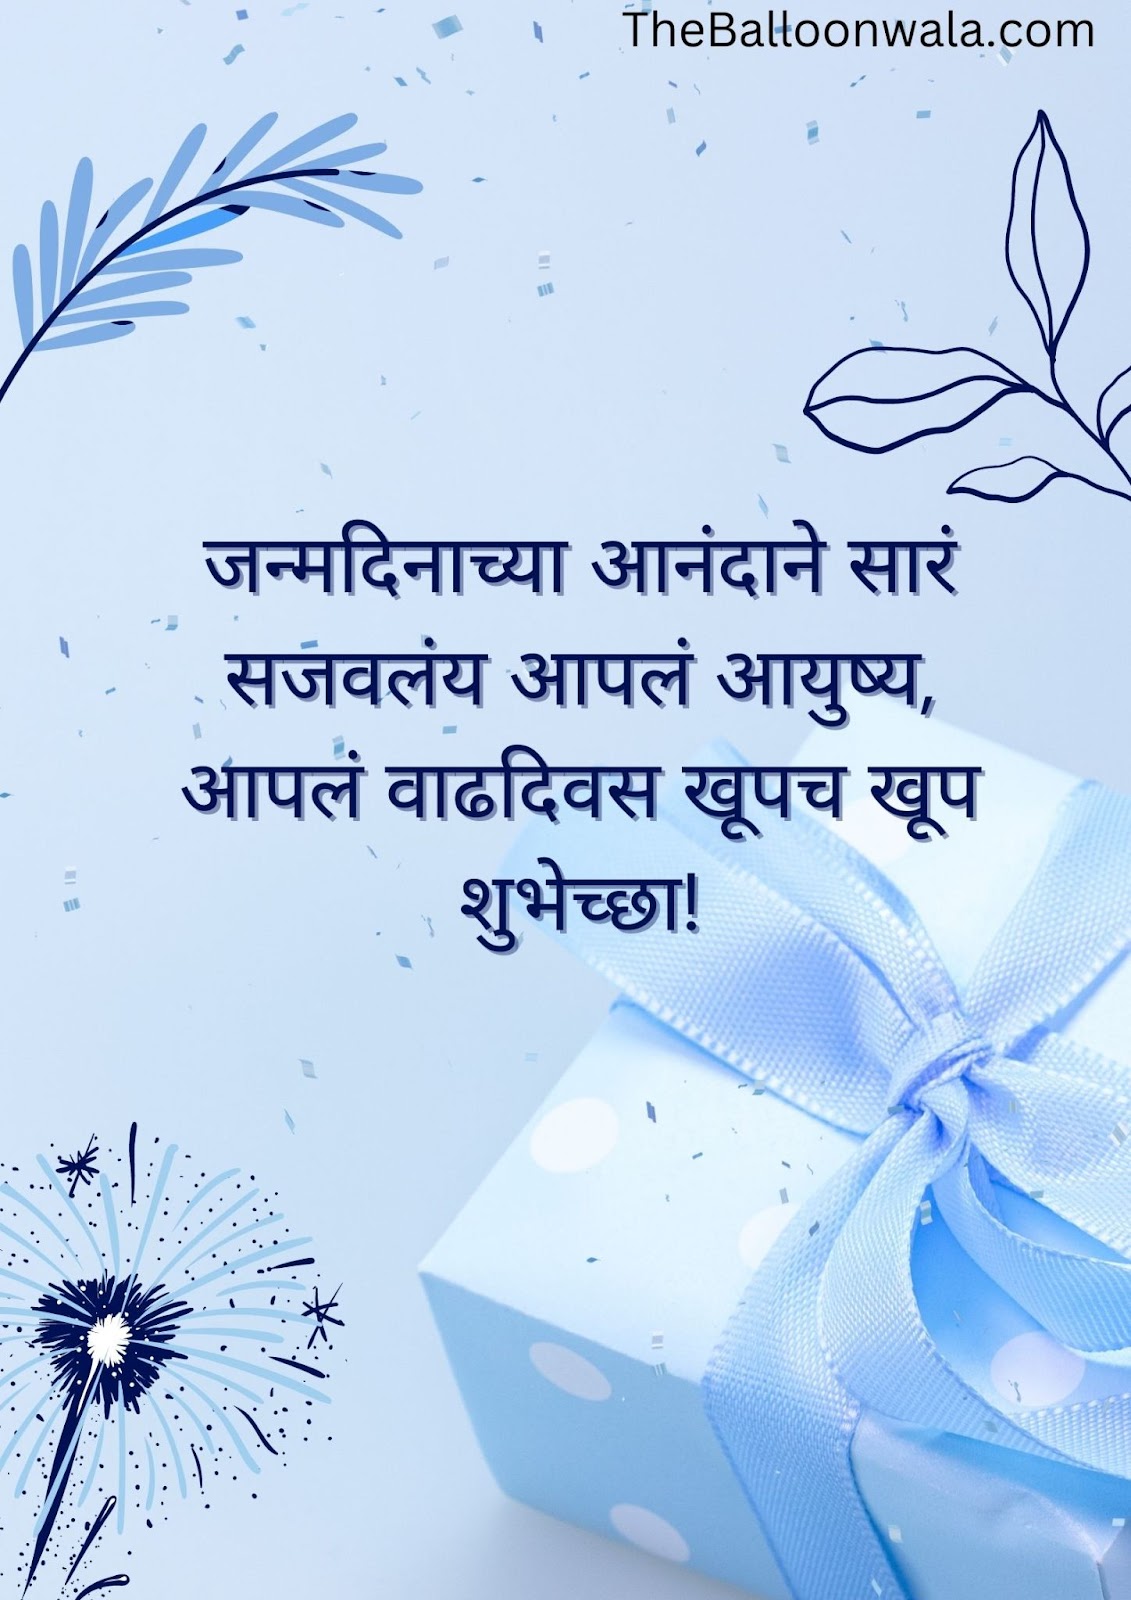 happy journey wishes in marathi